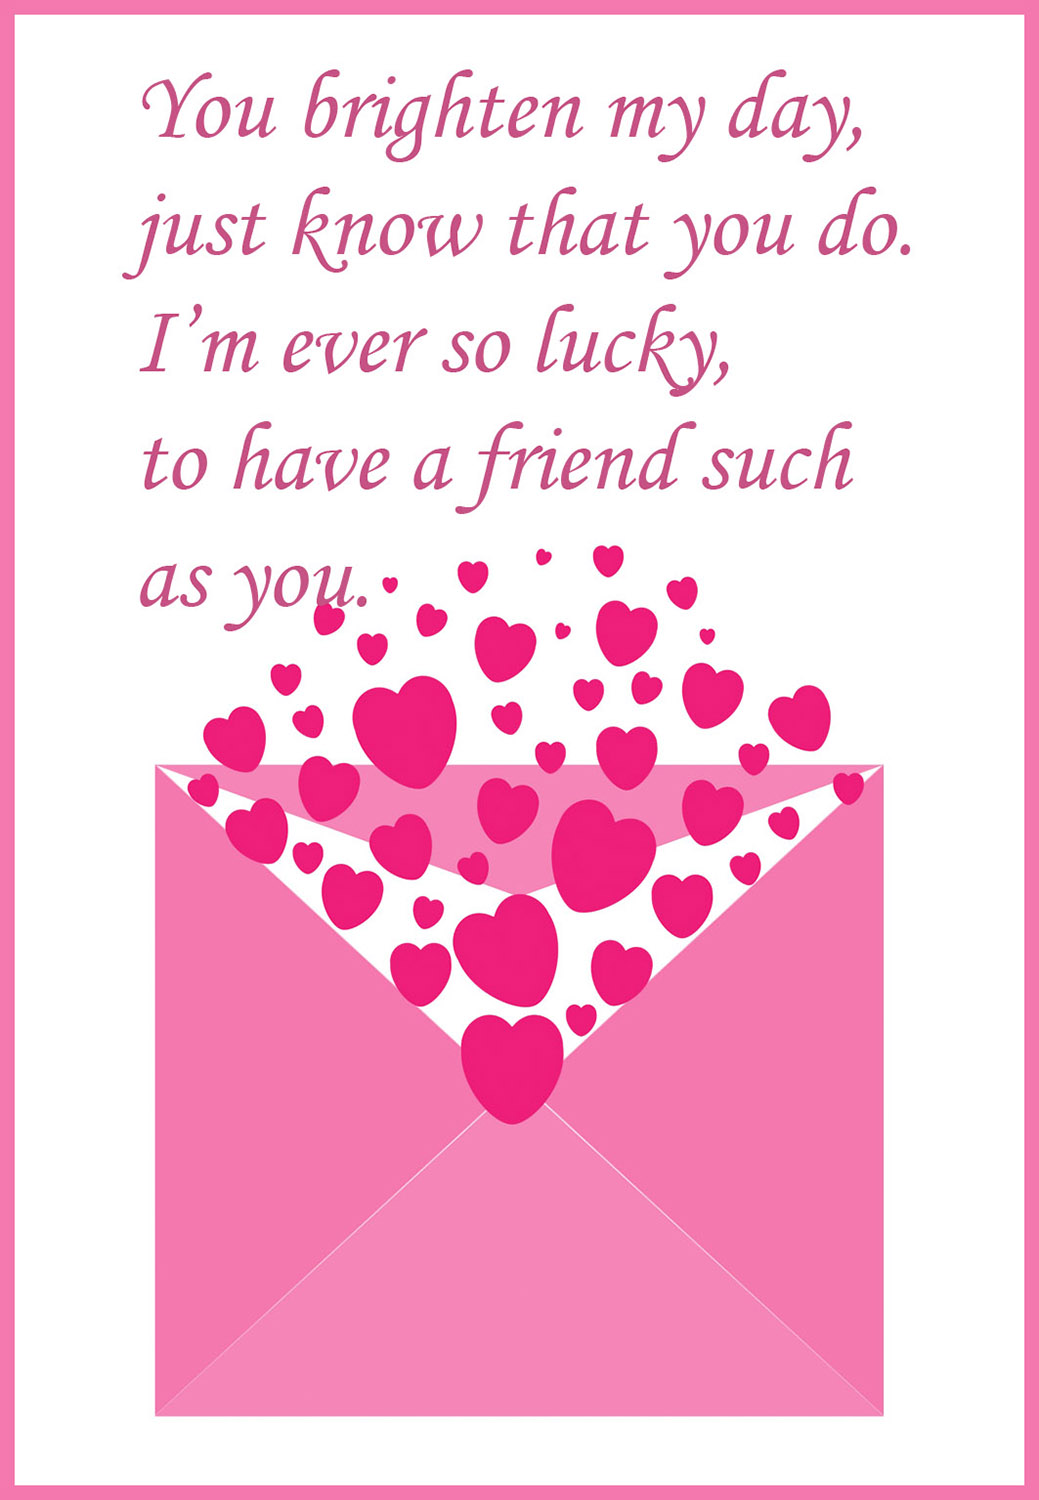 Printable Valentine Cards | Free Printable Greeting Cards